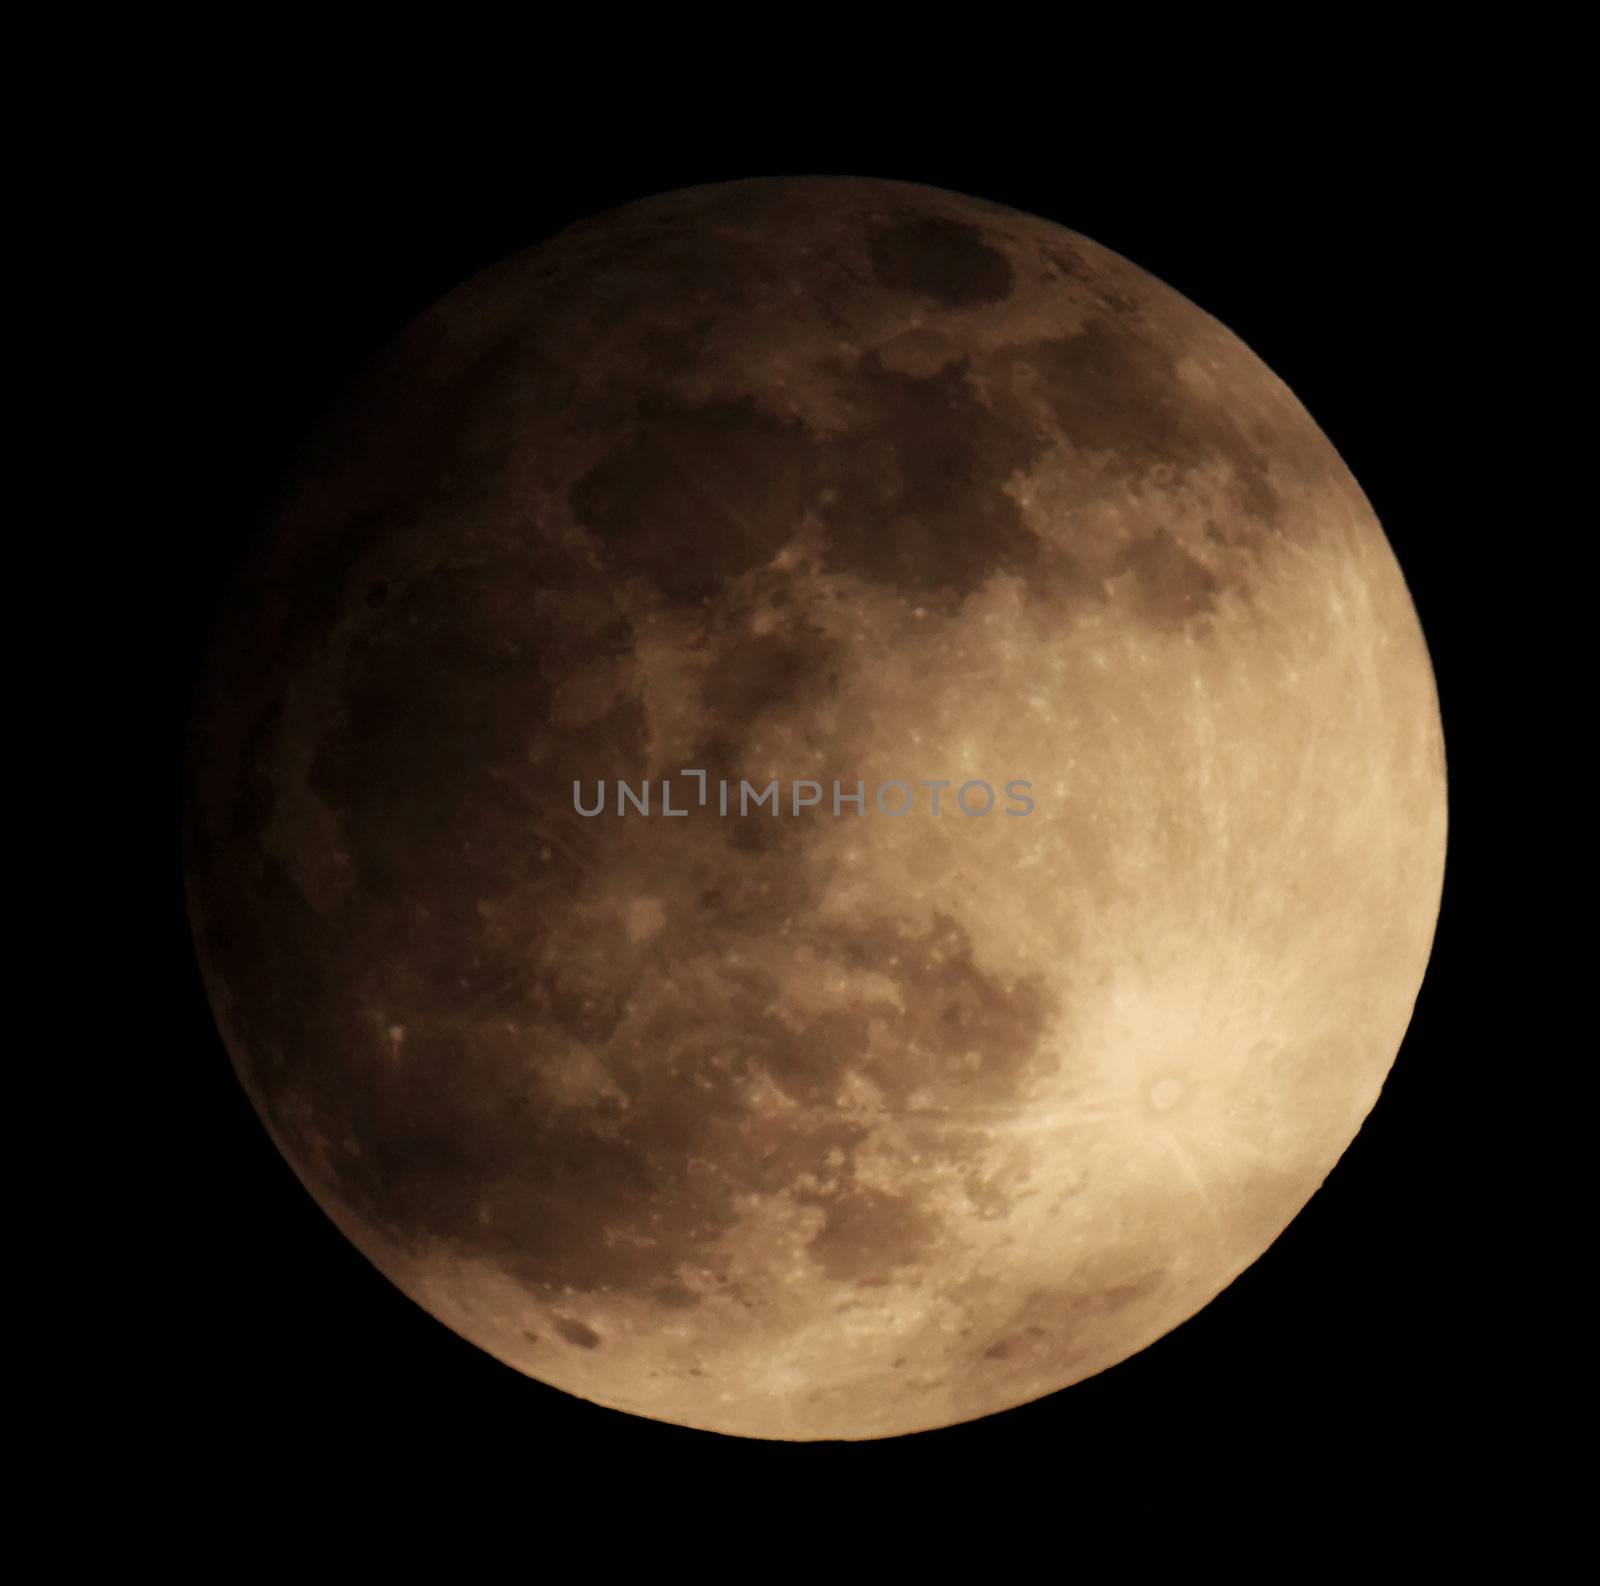 Lunar eclipse for a background 25.04.13. Ukraine, Donetsk region
